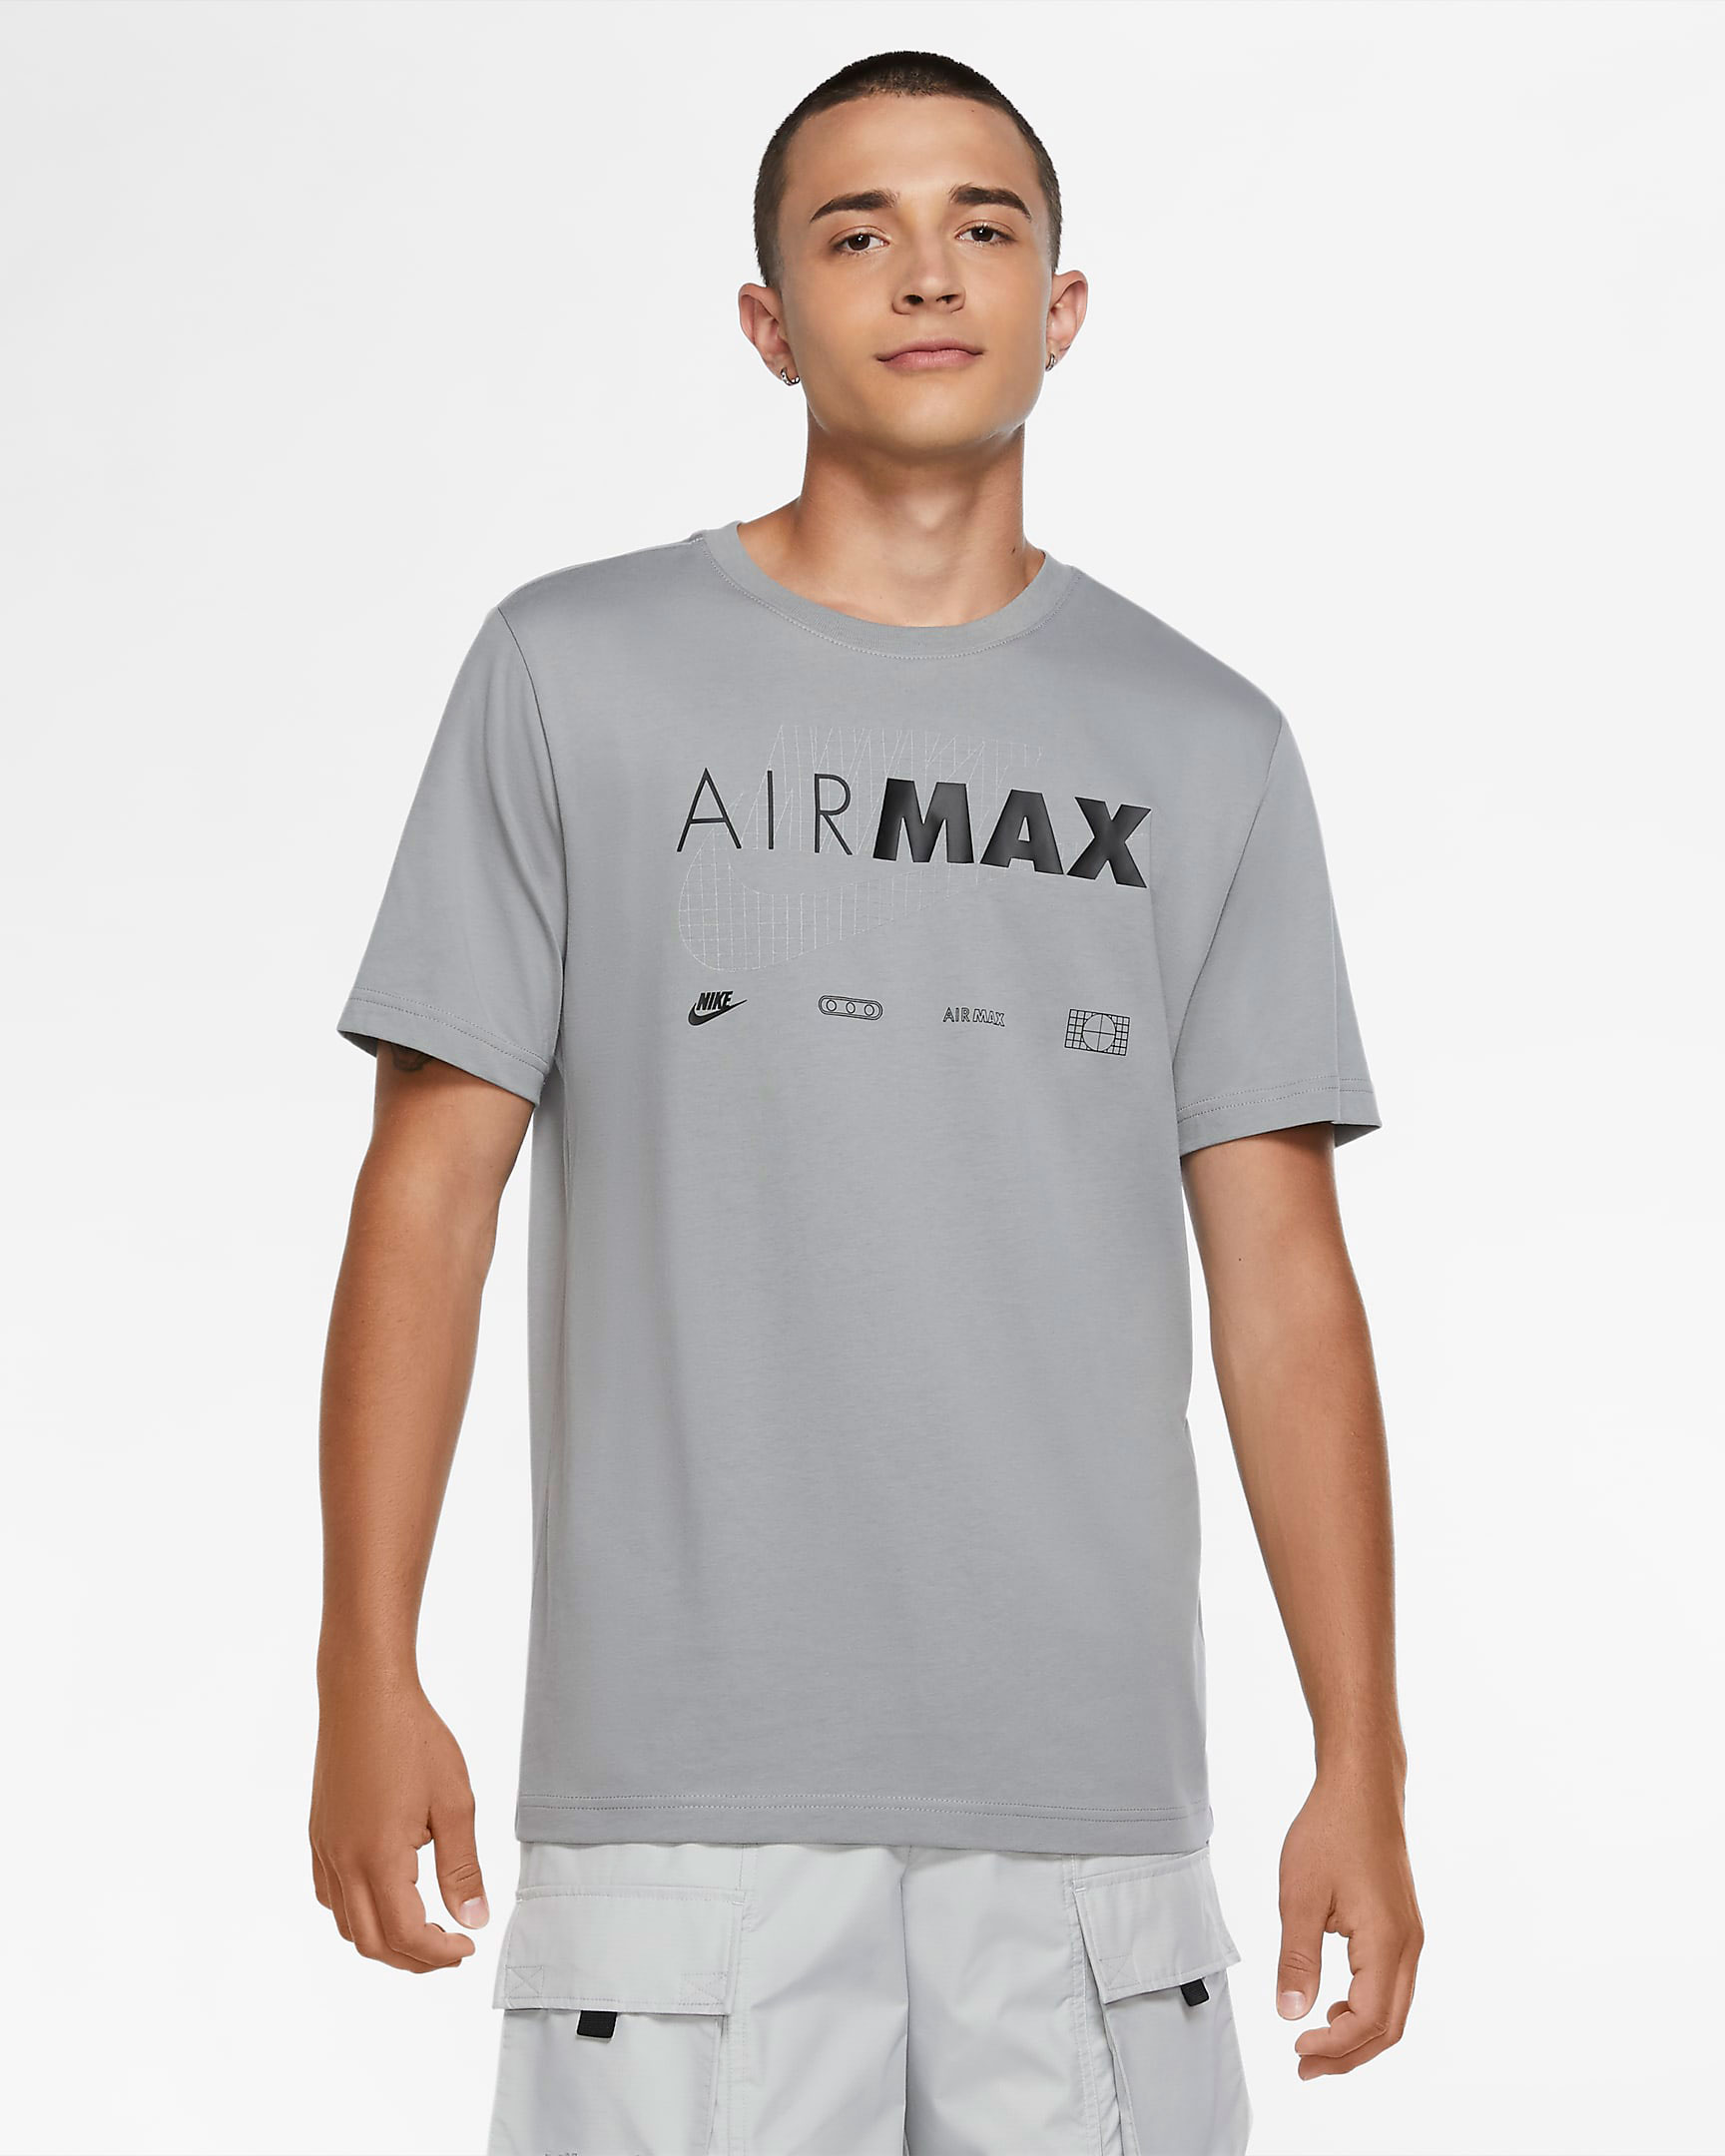 nike-air-max-shirt-grey-black